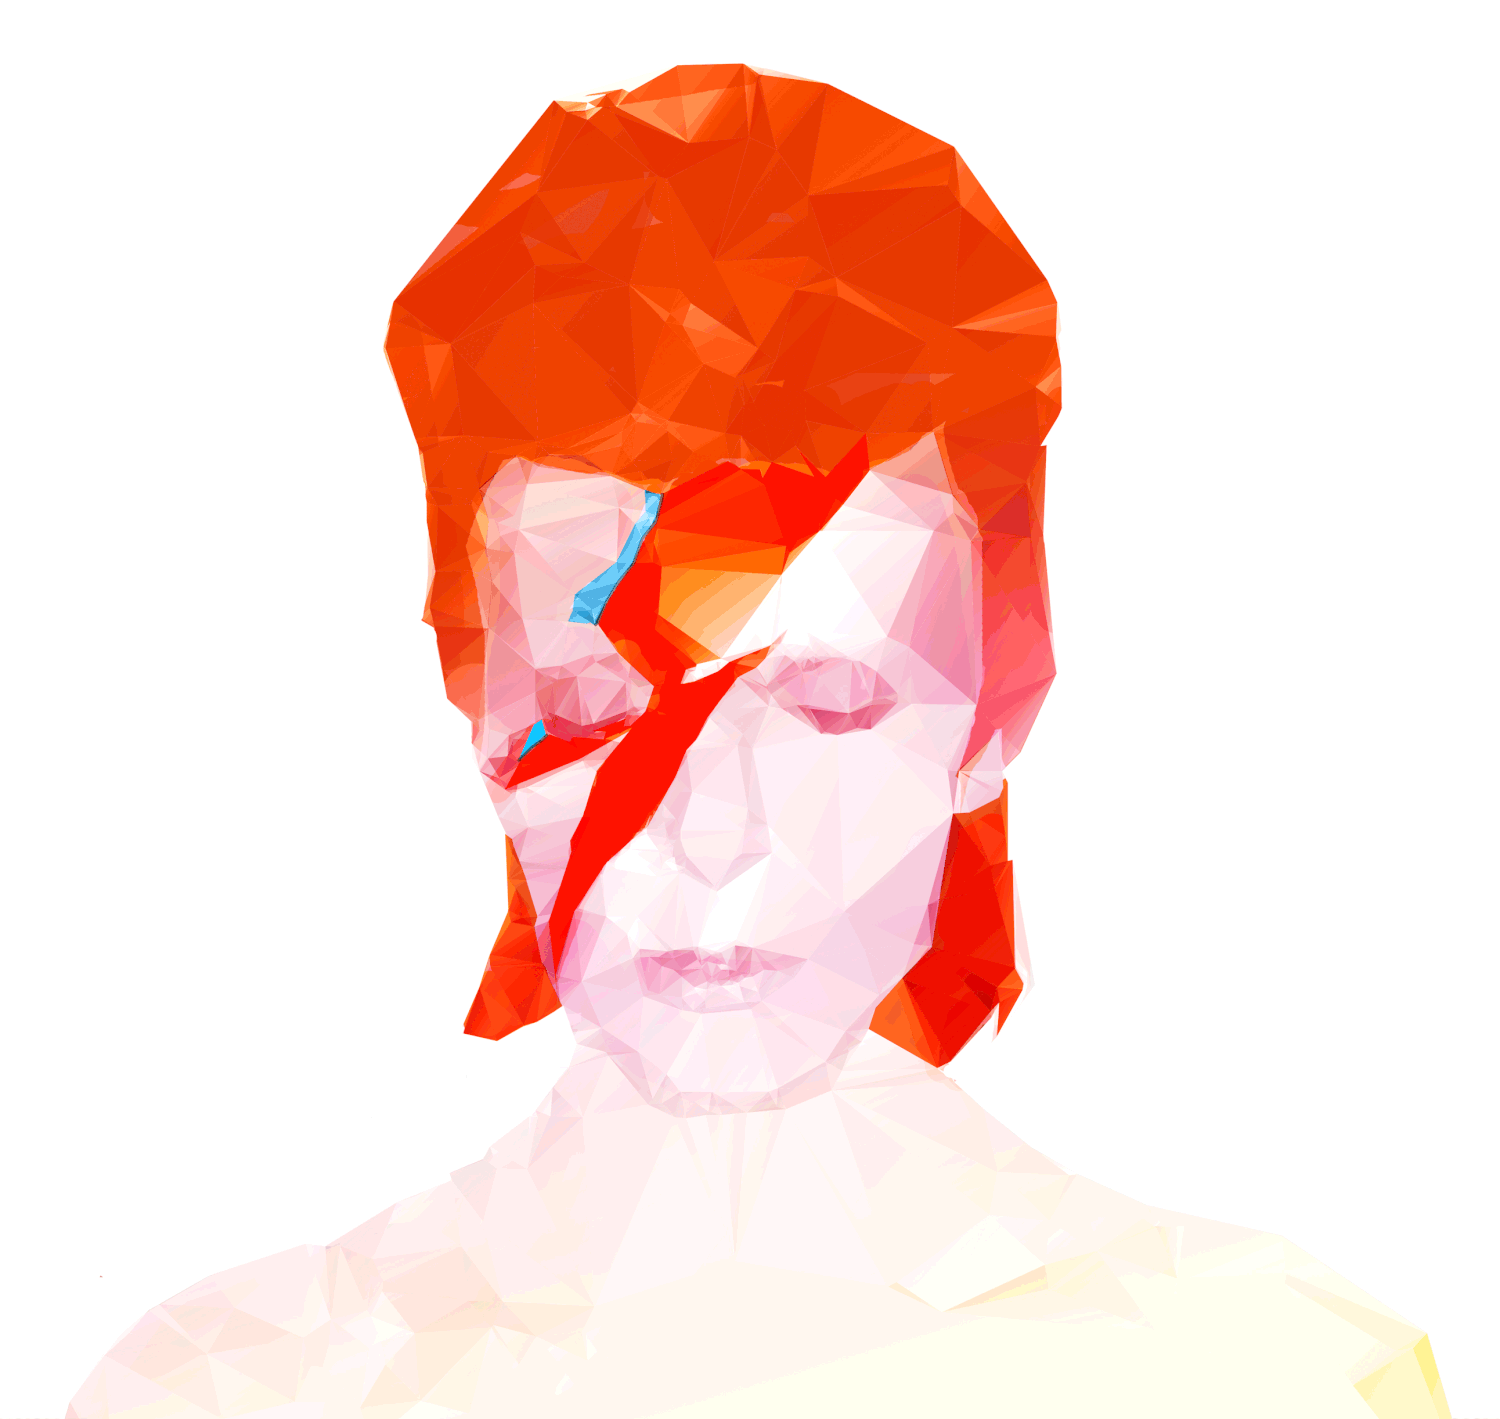 David Bowie animation